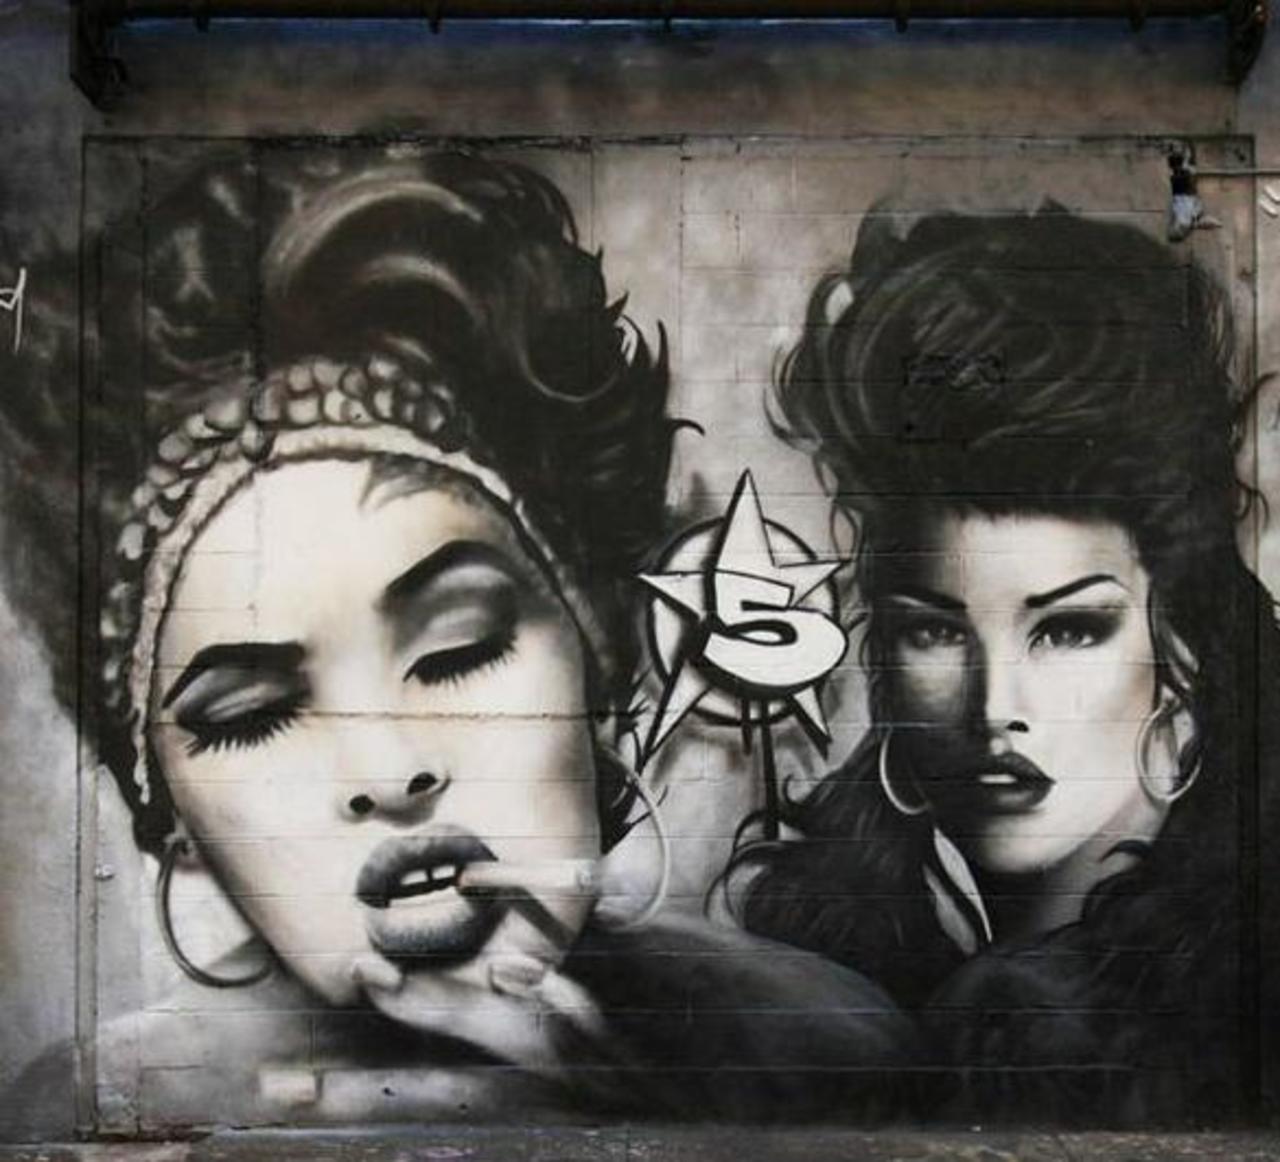 #art #streetart #graffiti http://t.co/NuvsCsUcHc